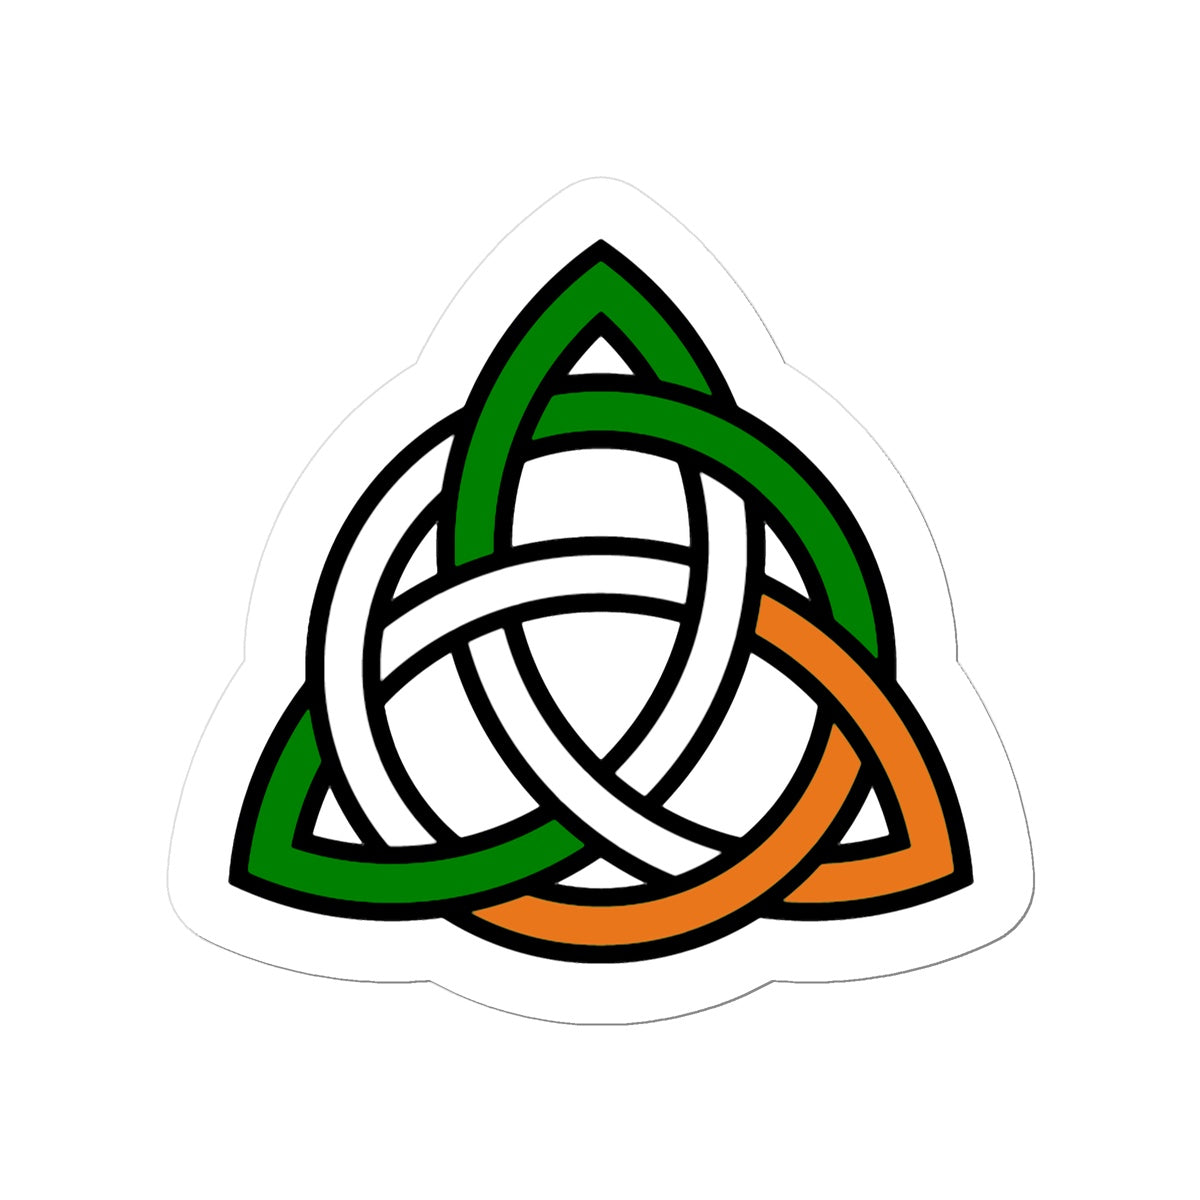 Irish Celtic Knot Sticker